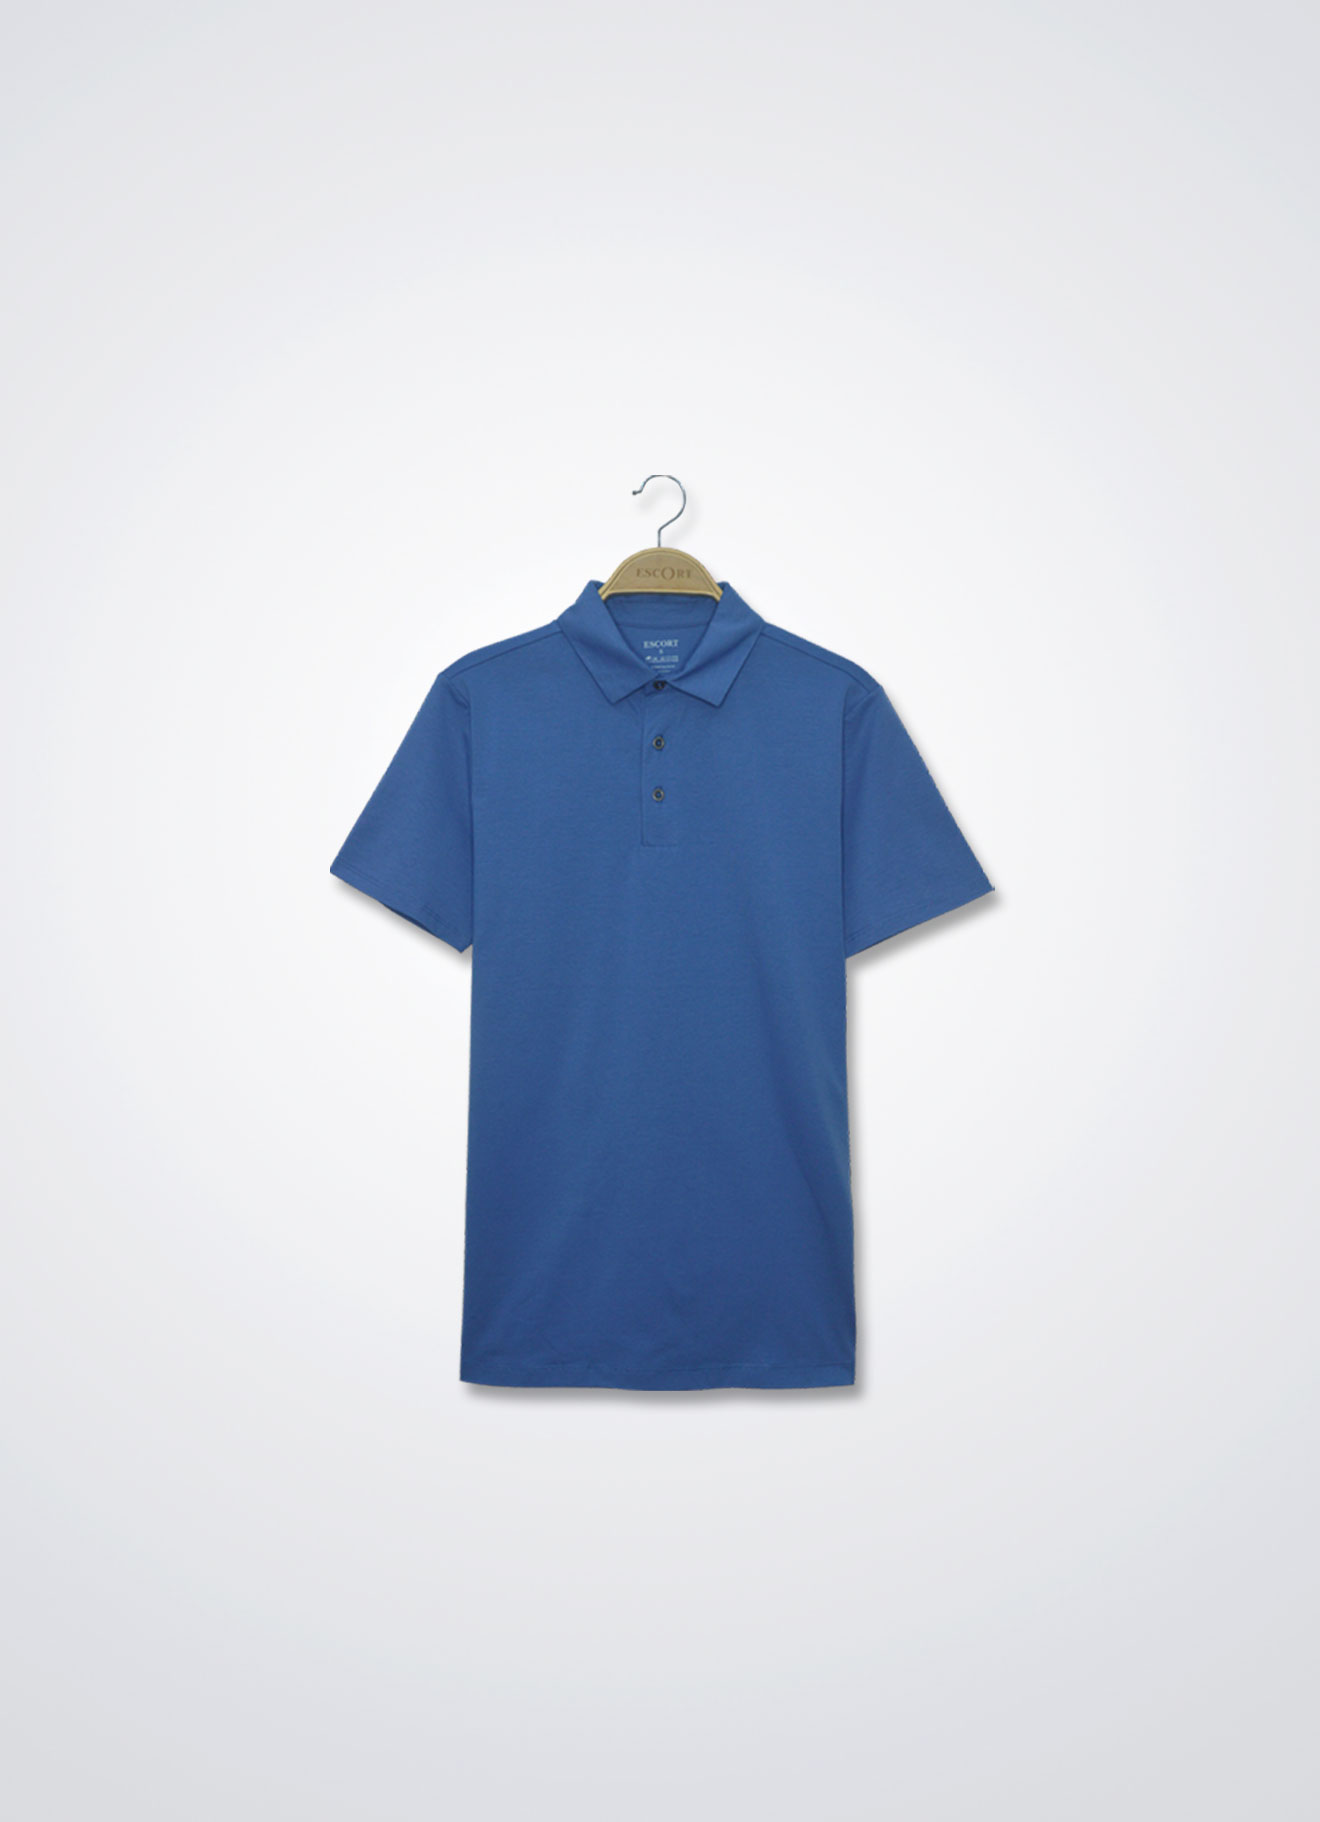 Coronet-Blue by Polo Shirt